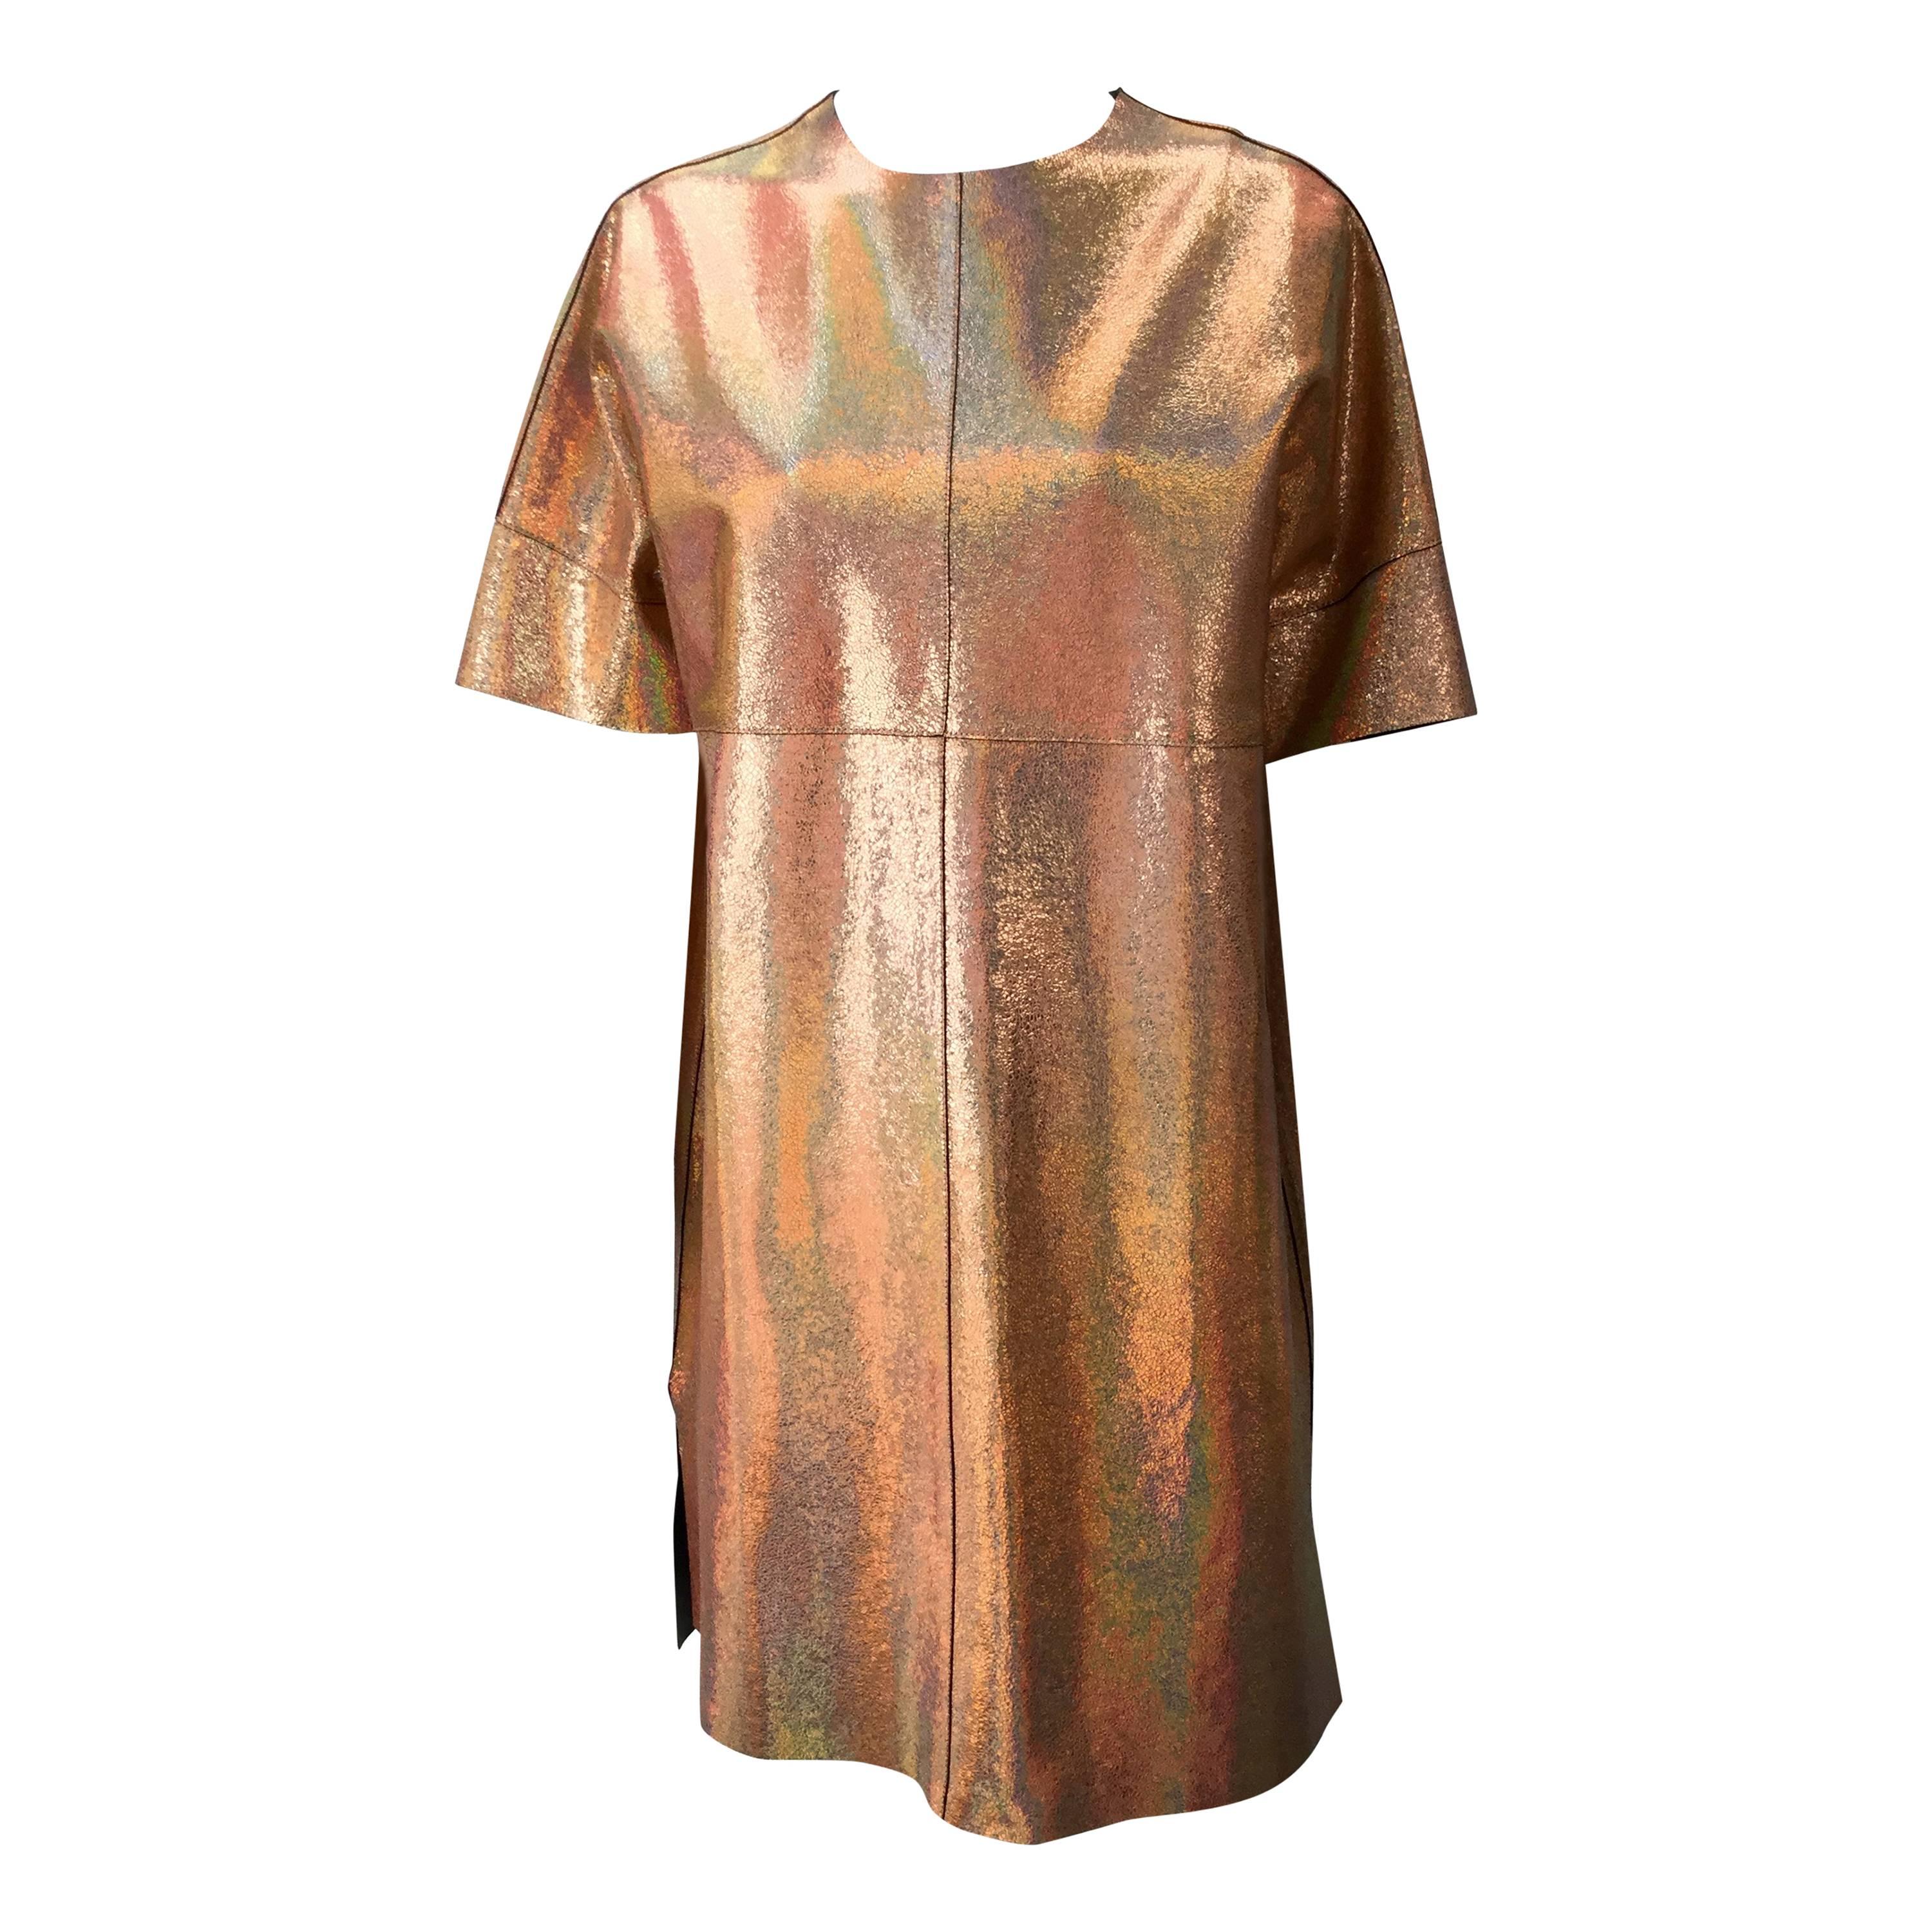 2014 Gucci Resort Collection Hologram Leather Shift Dress Large